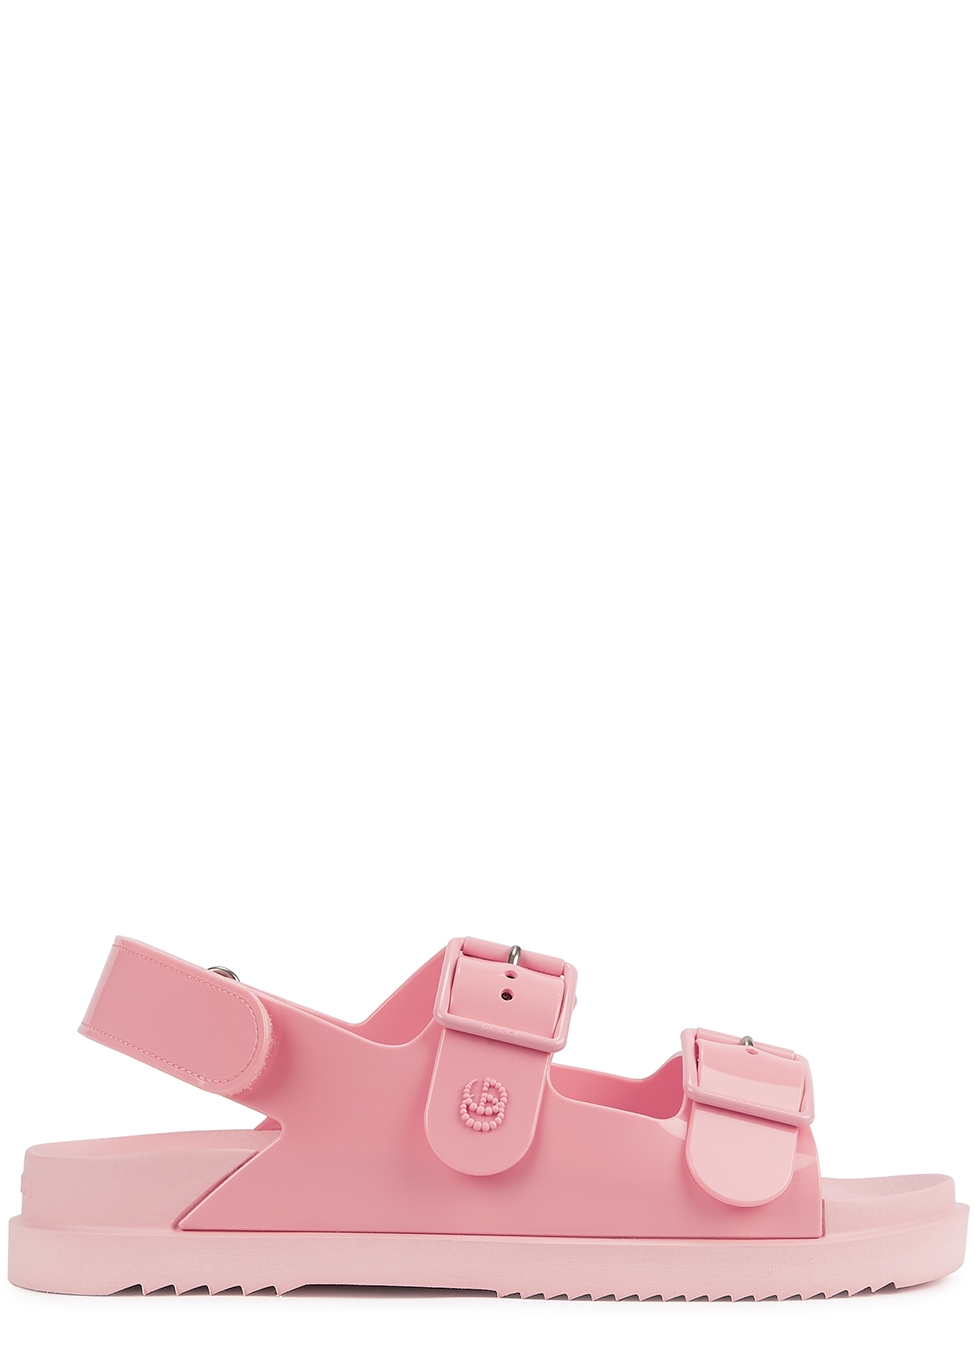 Gucci Isla pink rubber sandals - Harvey Nichols